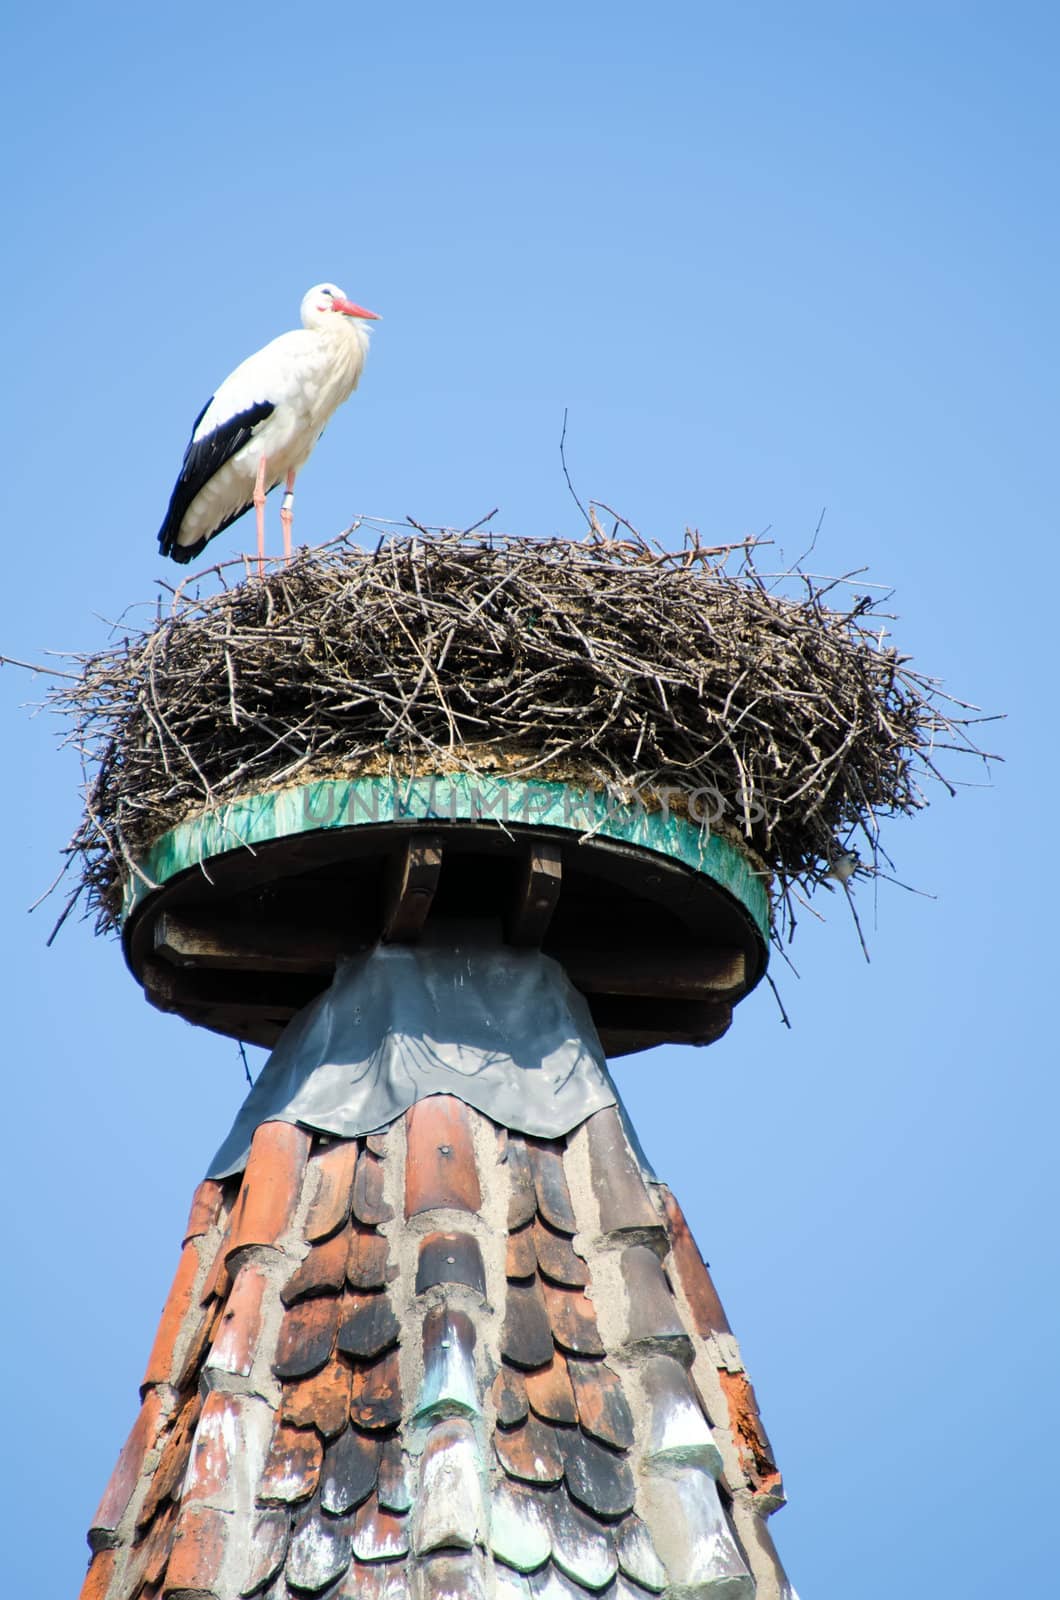 the stork in its nest by njaj